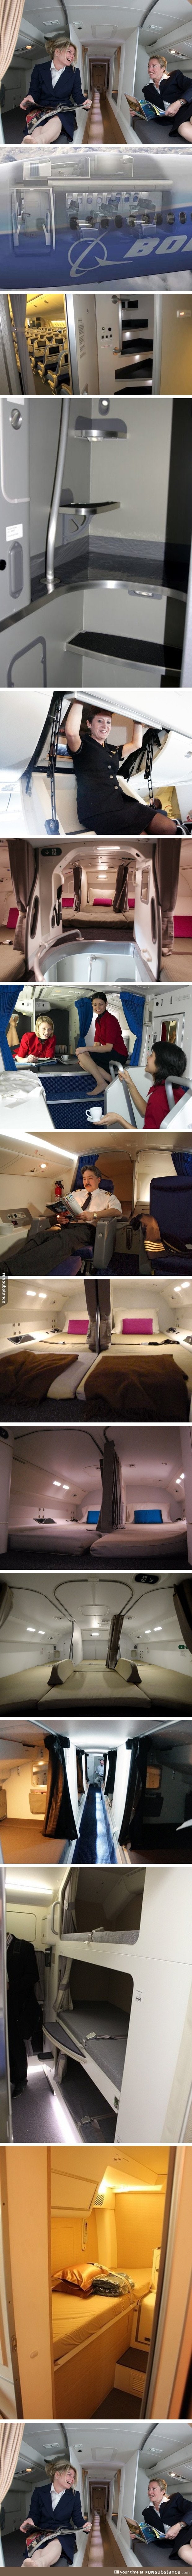 Secret Cabins Flight Attendants Sleep In During Long Haul Flights